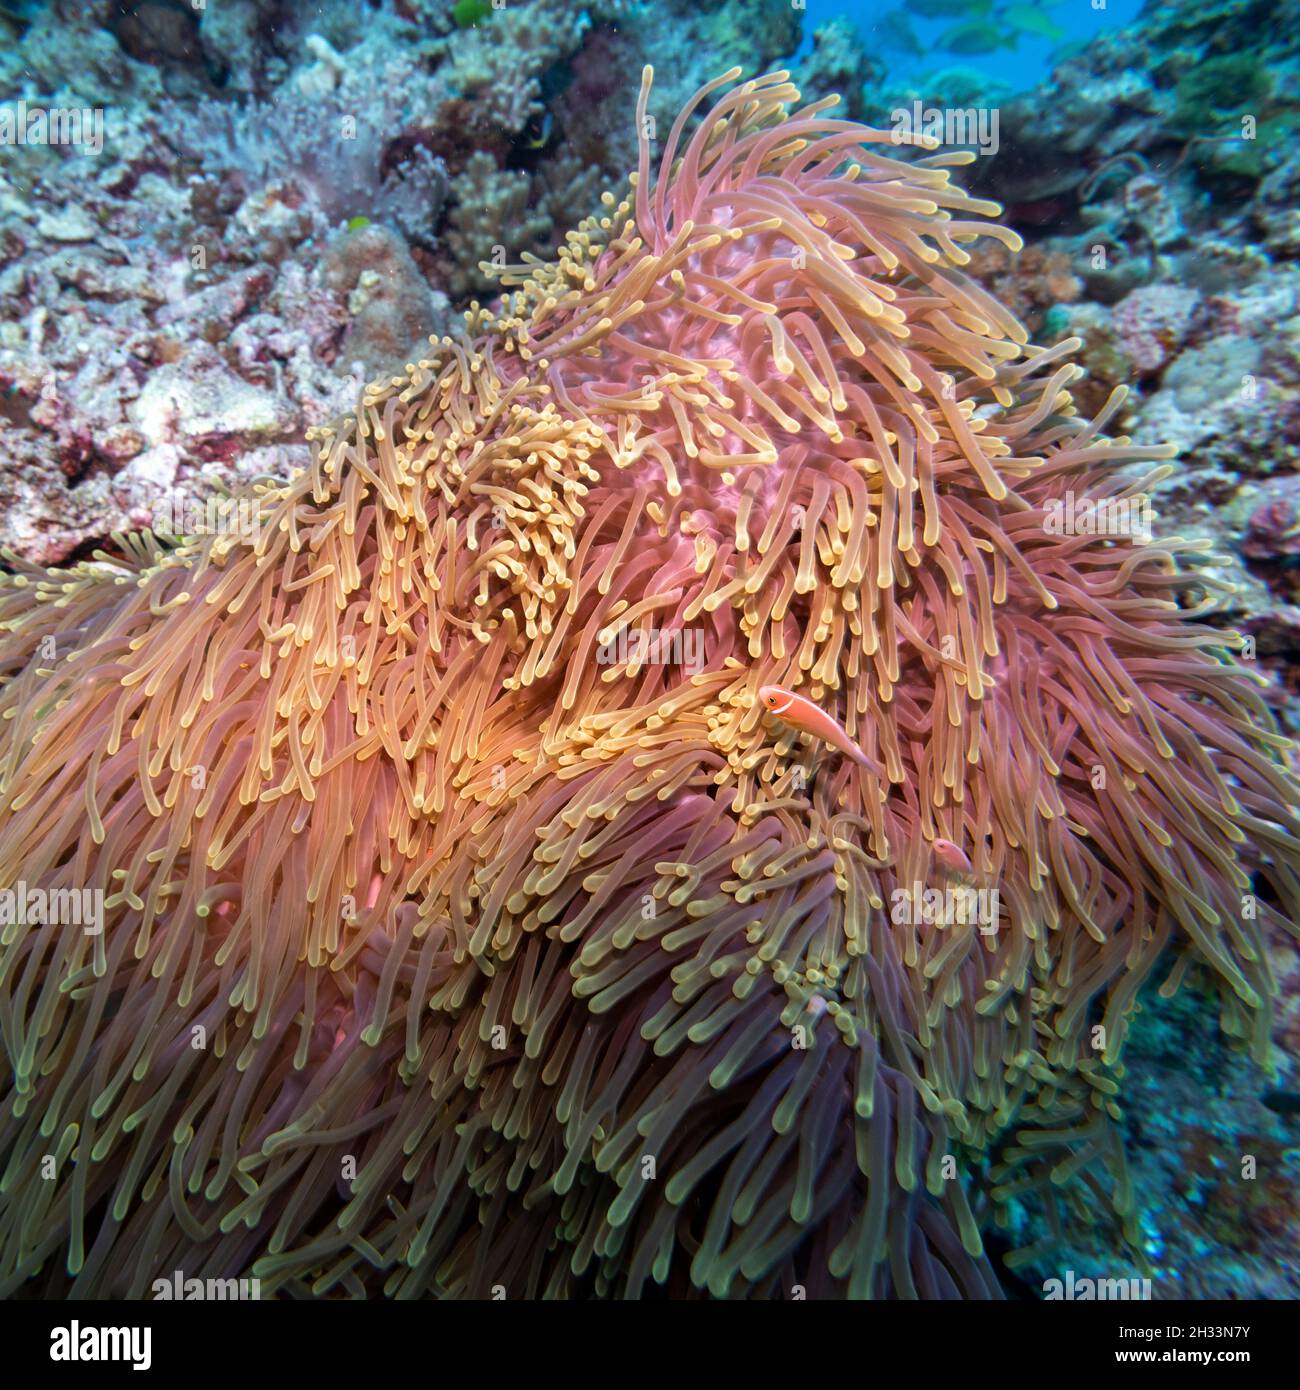 Anemone di mare e pesce, Nursery Dive Site, Great Barrier Reef, Queensland, Australia Foto Stock